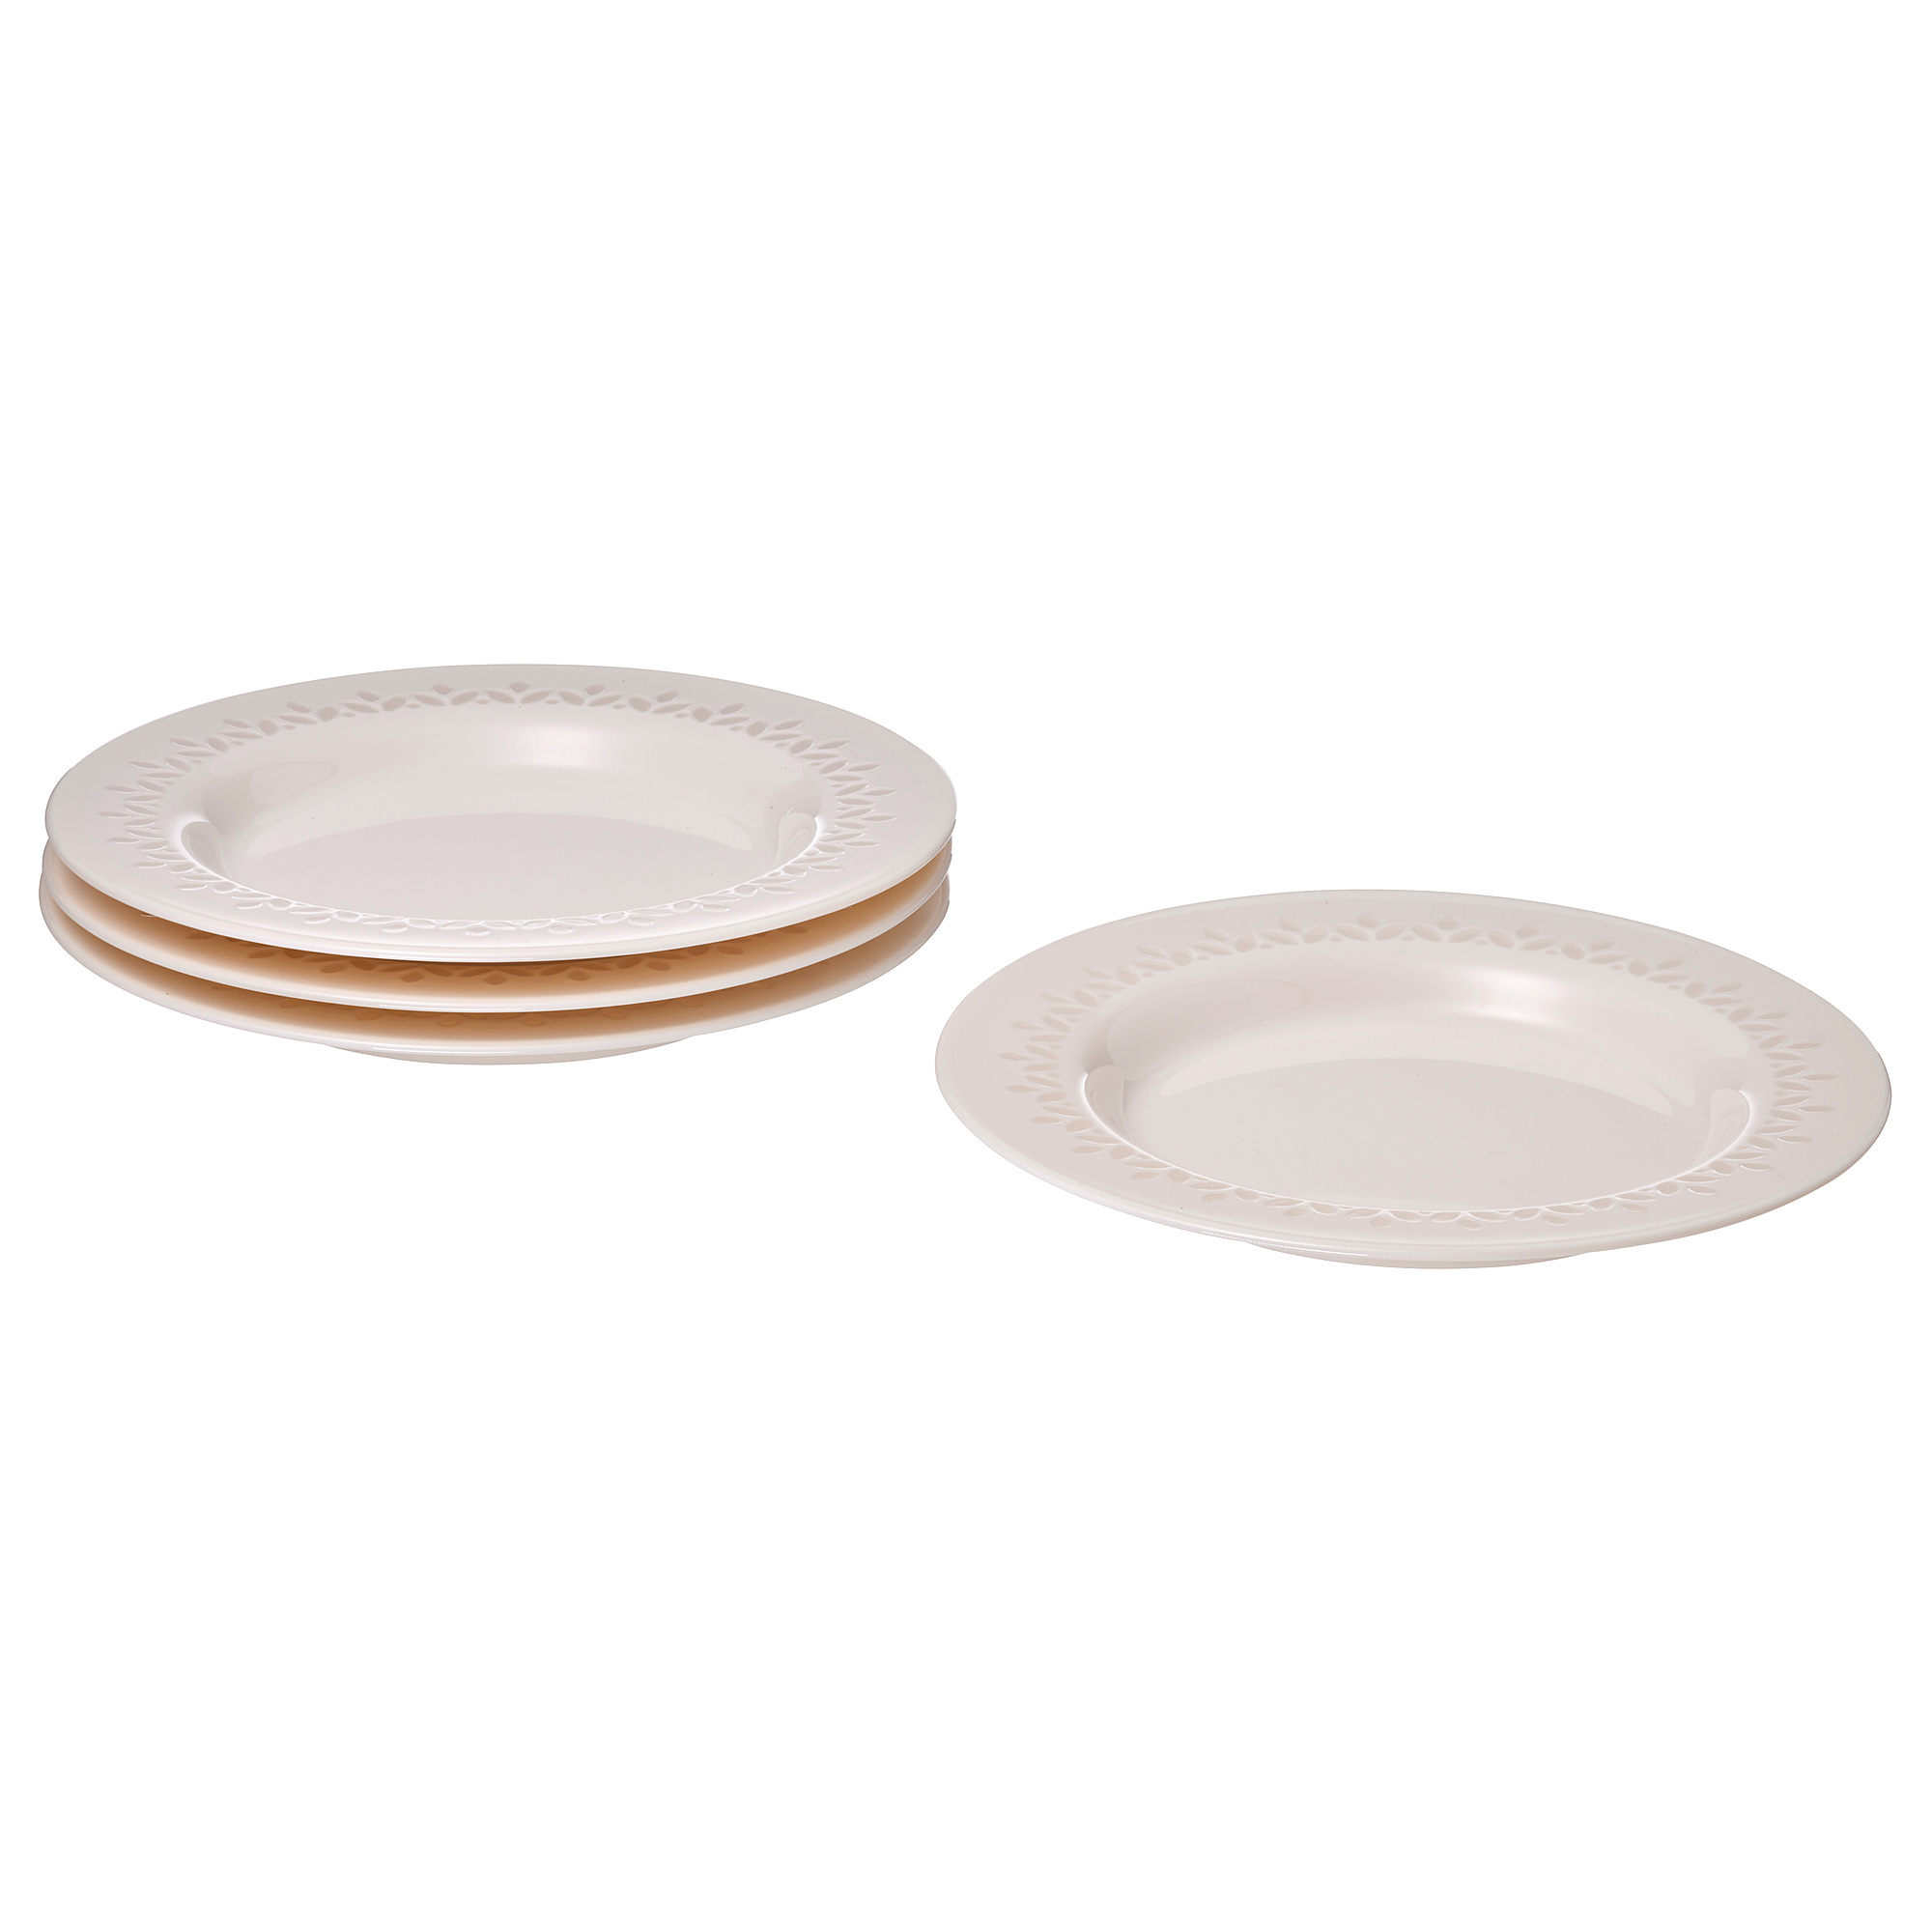 PARADISISK - side plate, off-white, 20 cm | IKEA Hong Kong and Macau